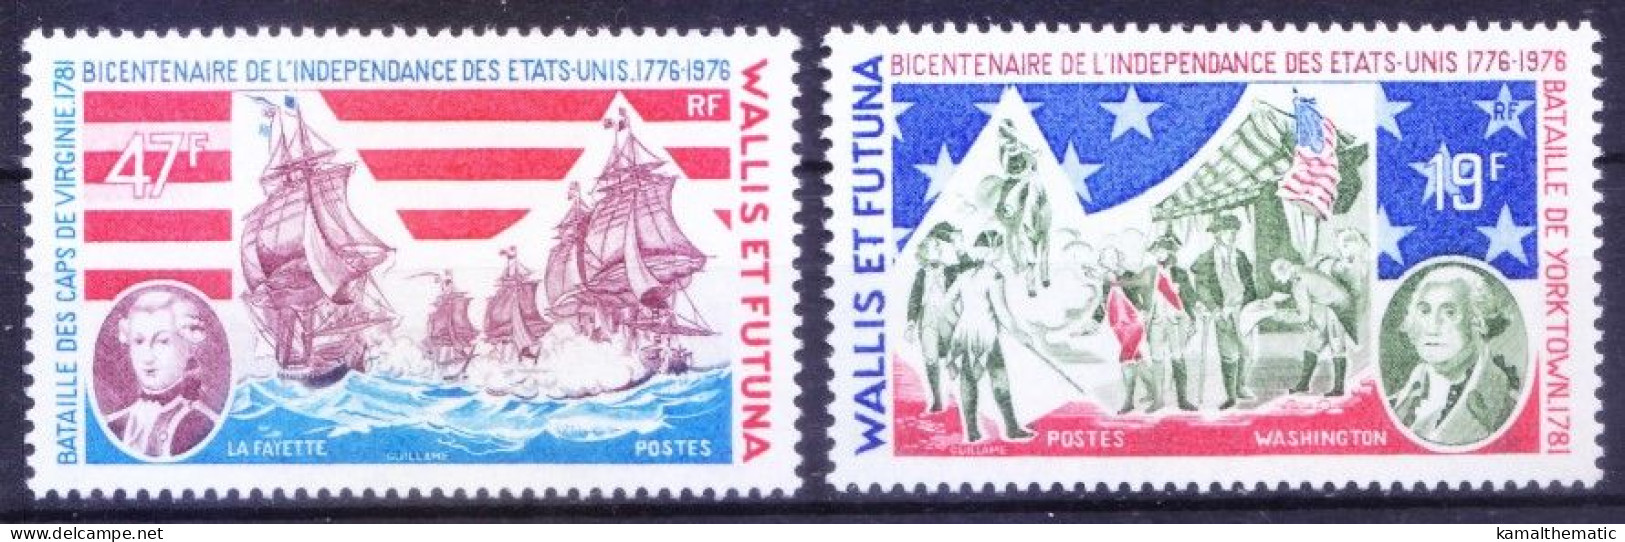 Wallis And Futuna 196 MNH 2v, Bicentenary Of Independence Of United States - Unabhängigkeit USA